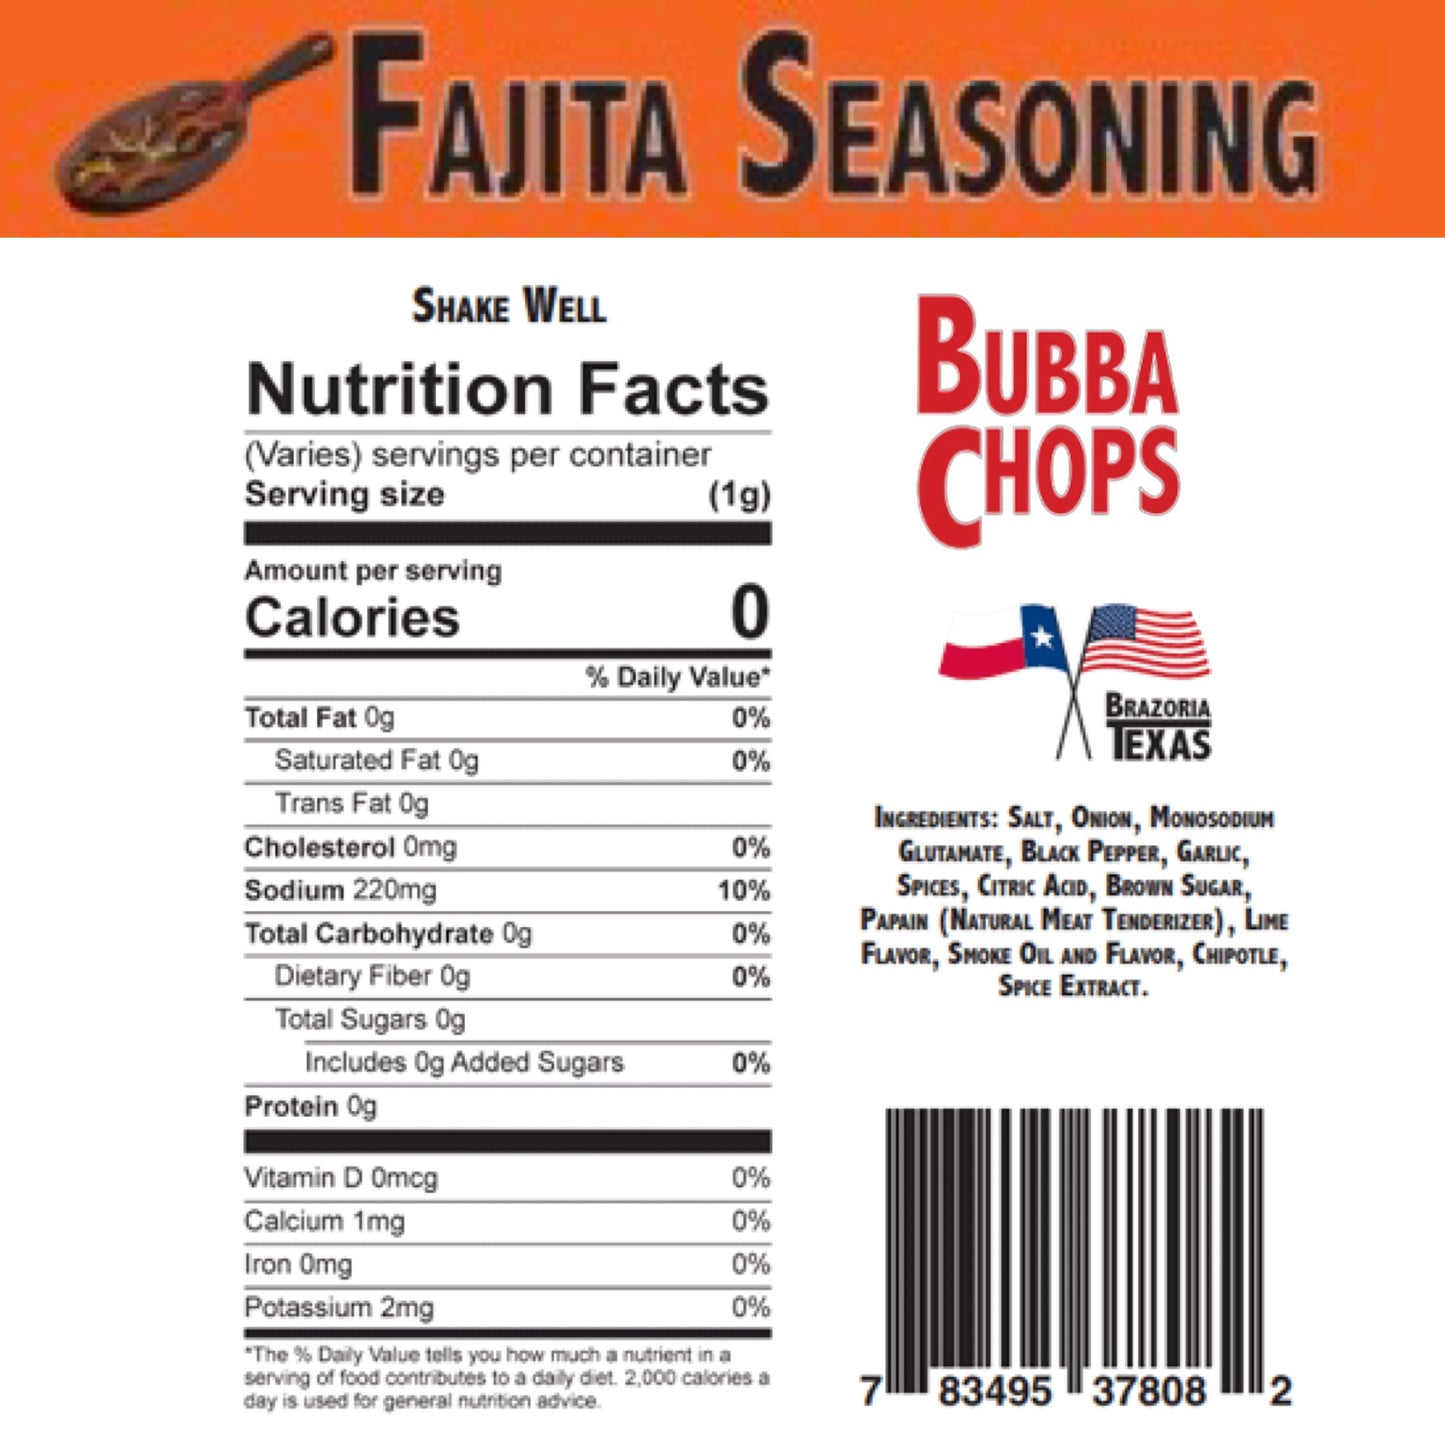 Bubba Chops Fajita Seasoning